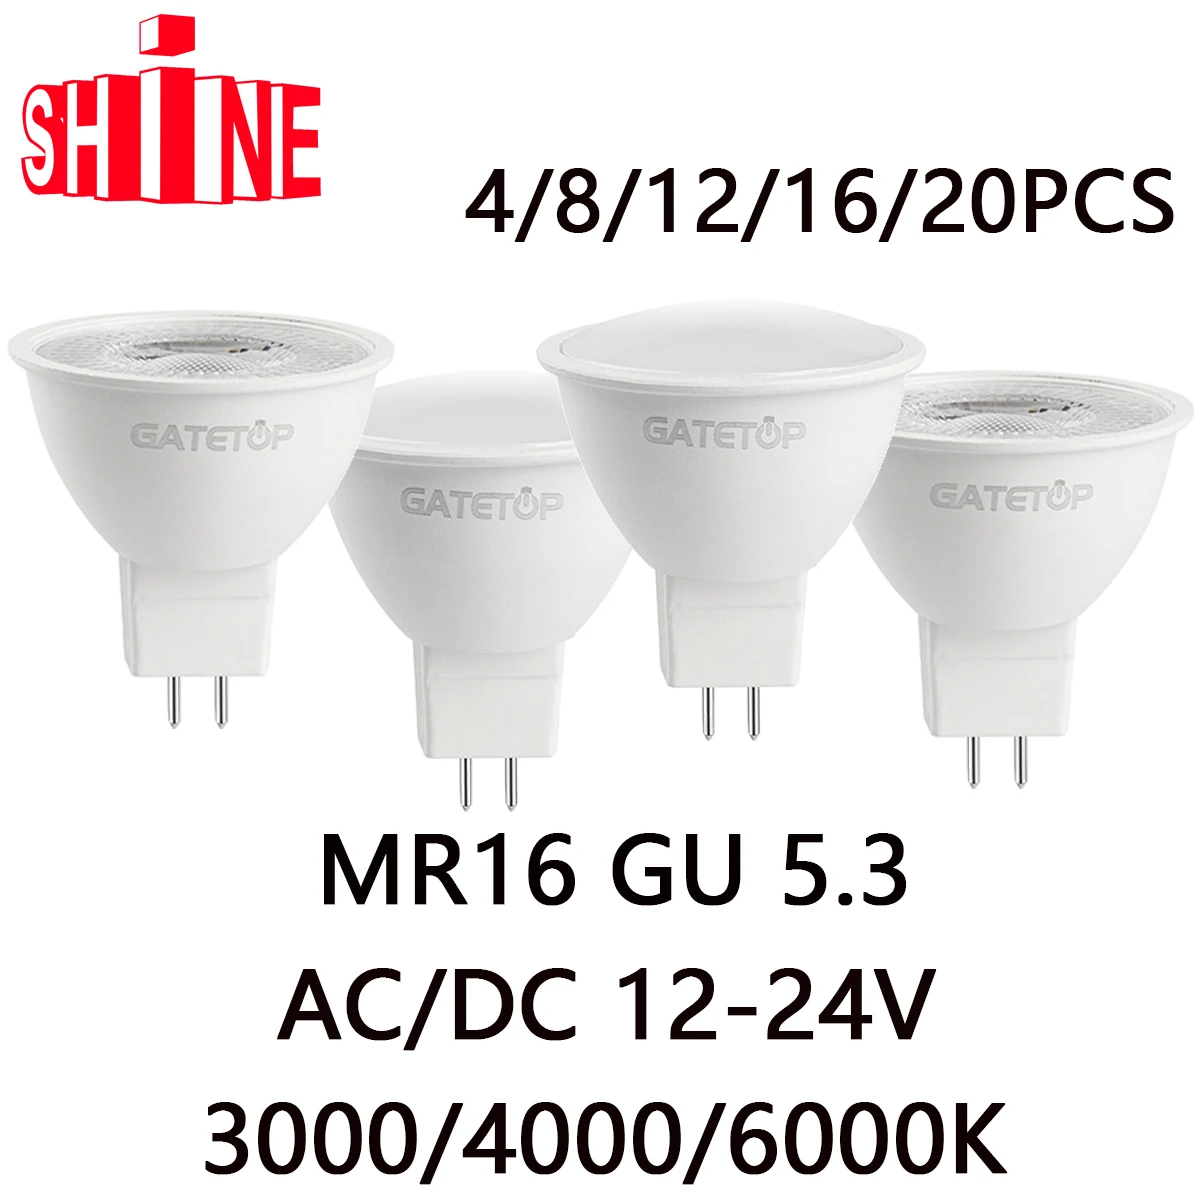 

4-20PCS LED low voltage spotlight 3W-7W GU5.3 AC/DC 12V-24V flicker-free high warm white light can replace 20W 50W halogen lamp